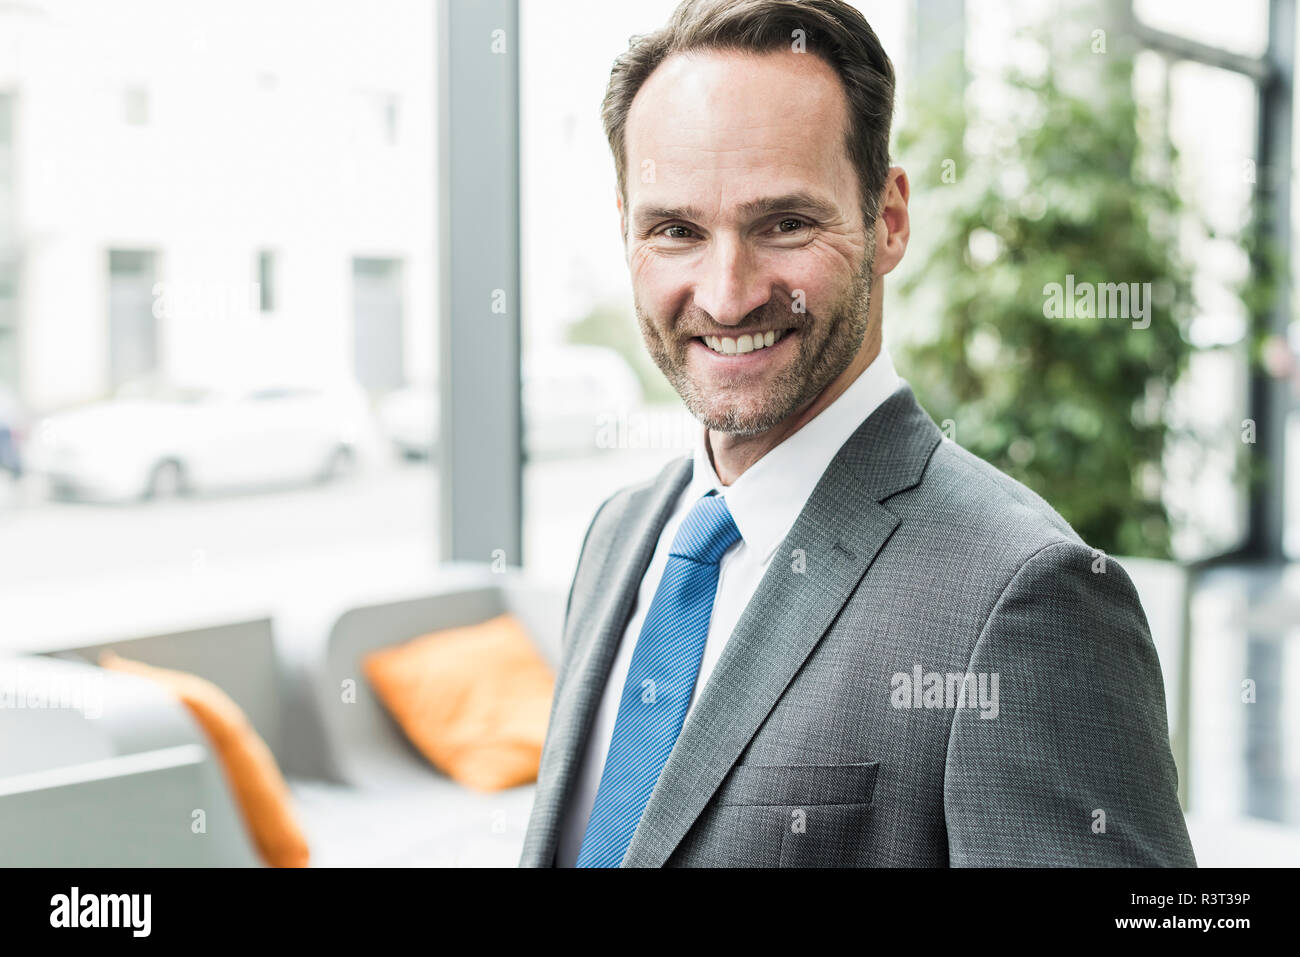 Portrait of smiling businessman Stock Photo